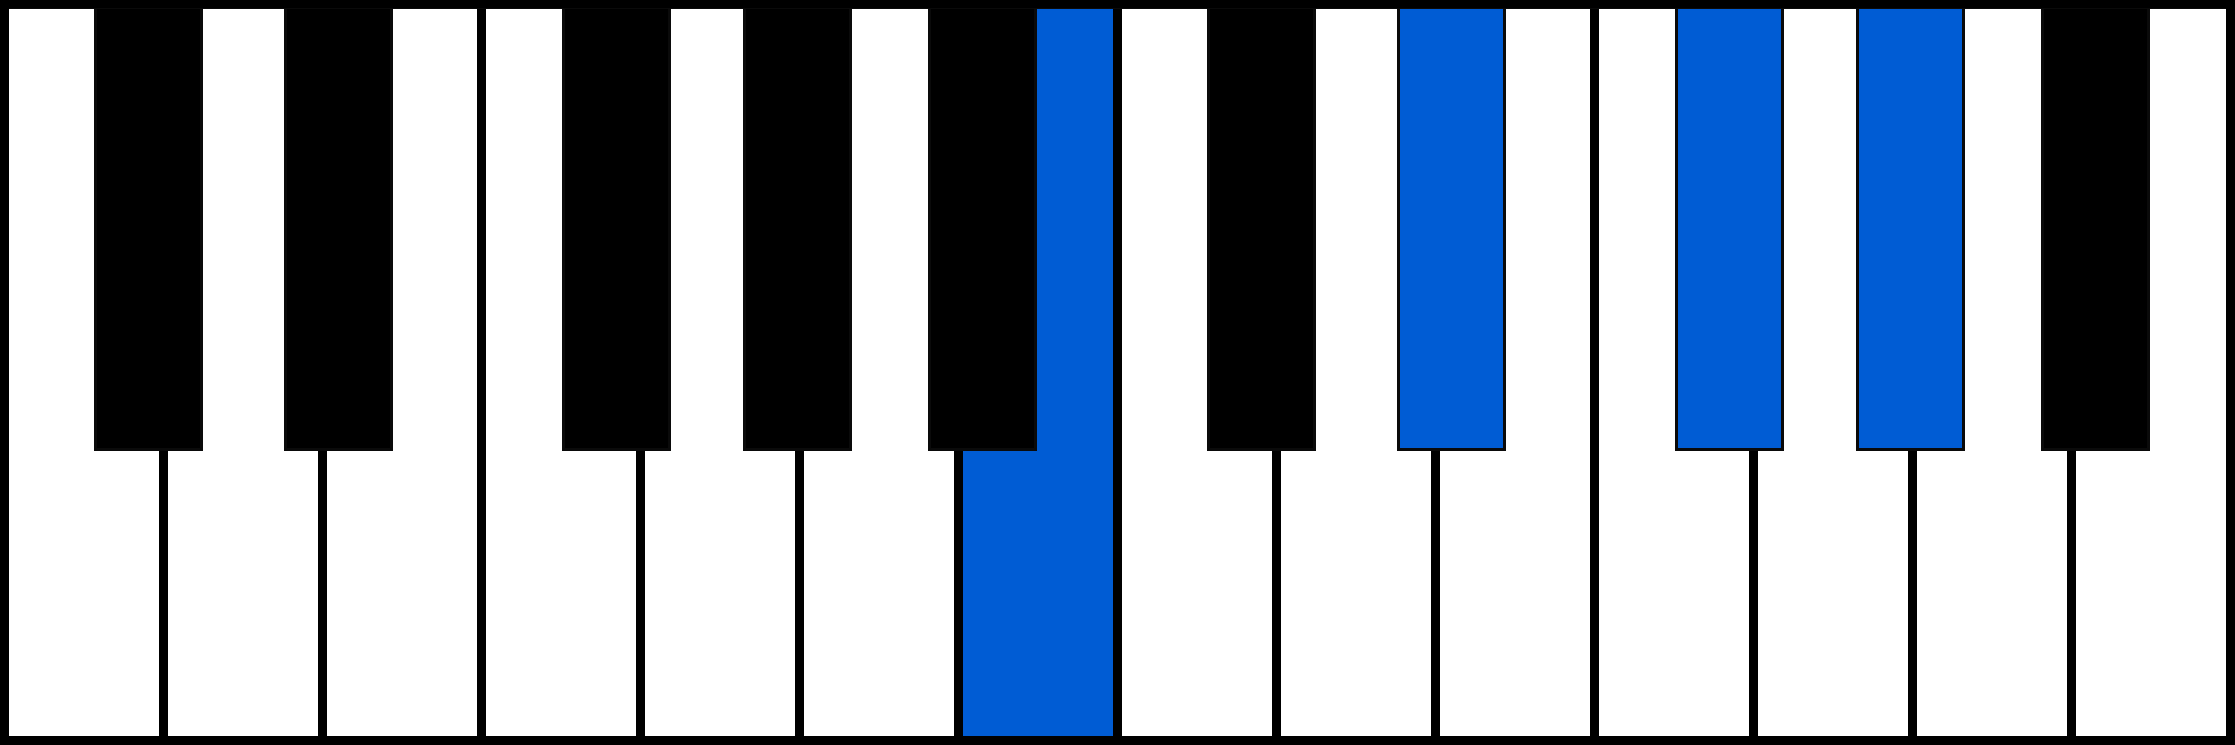 B6 piano chord fingering